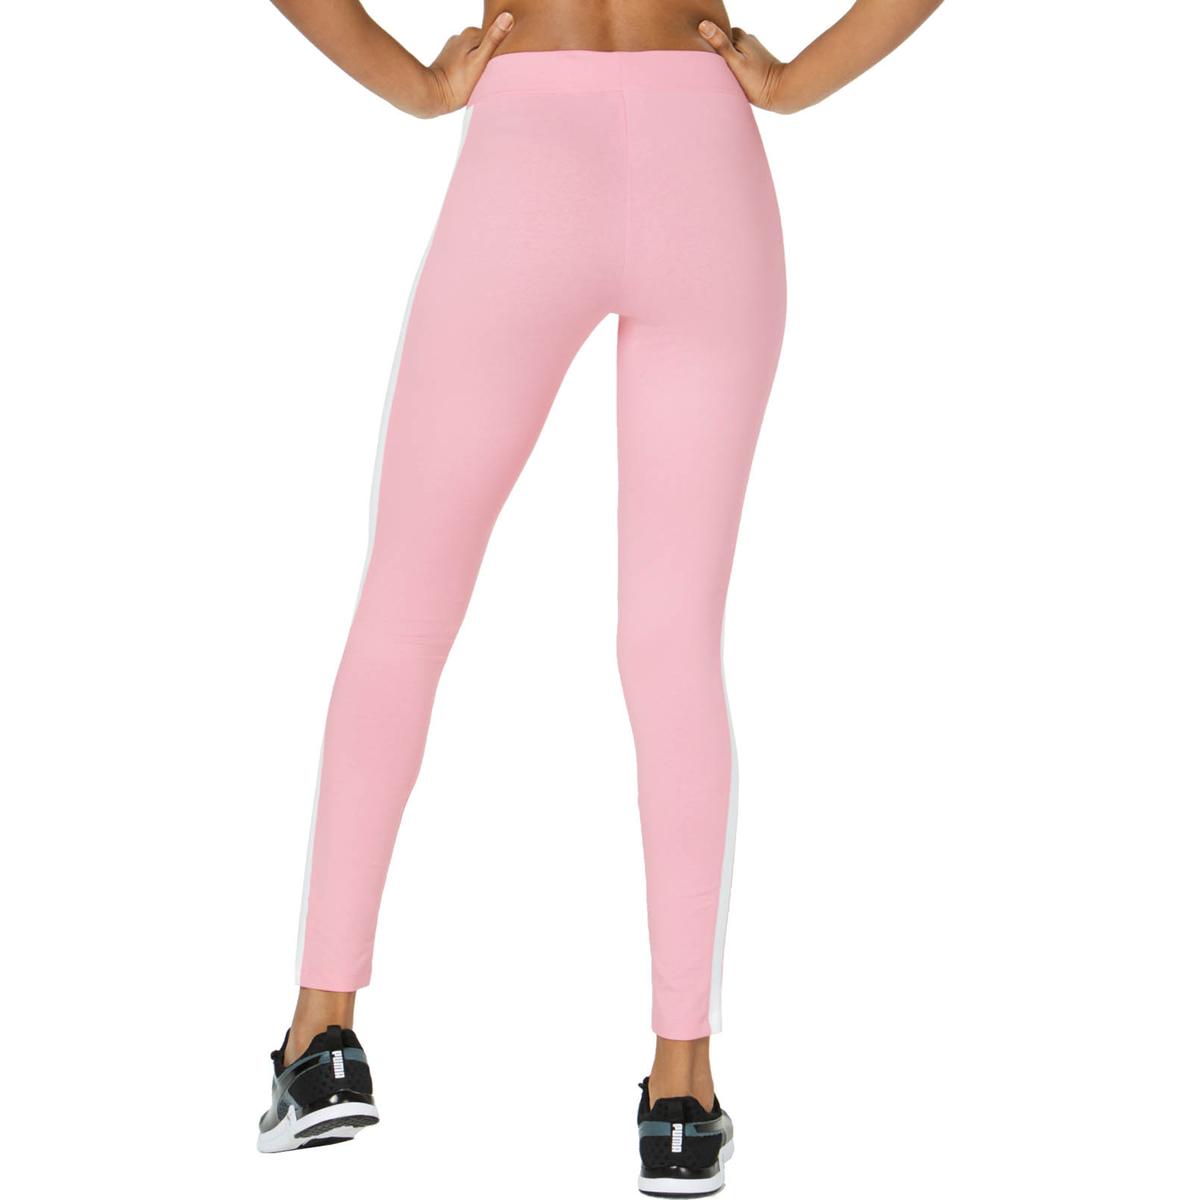 Puma Womens Pink Fitness Yogo Running Athletic Leggings S Bhfo 6346 Ebay